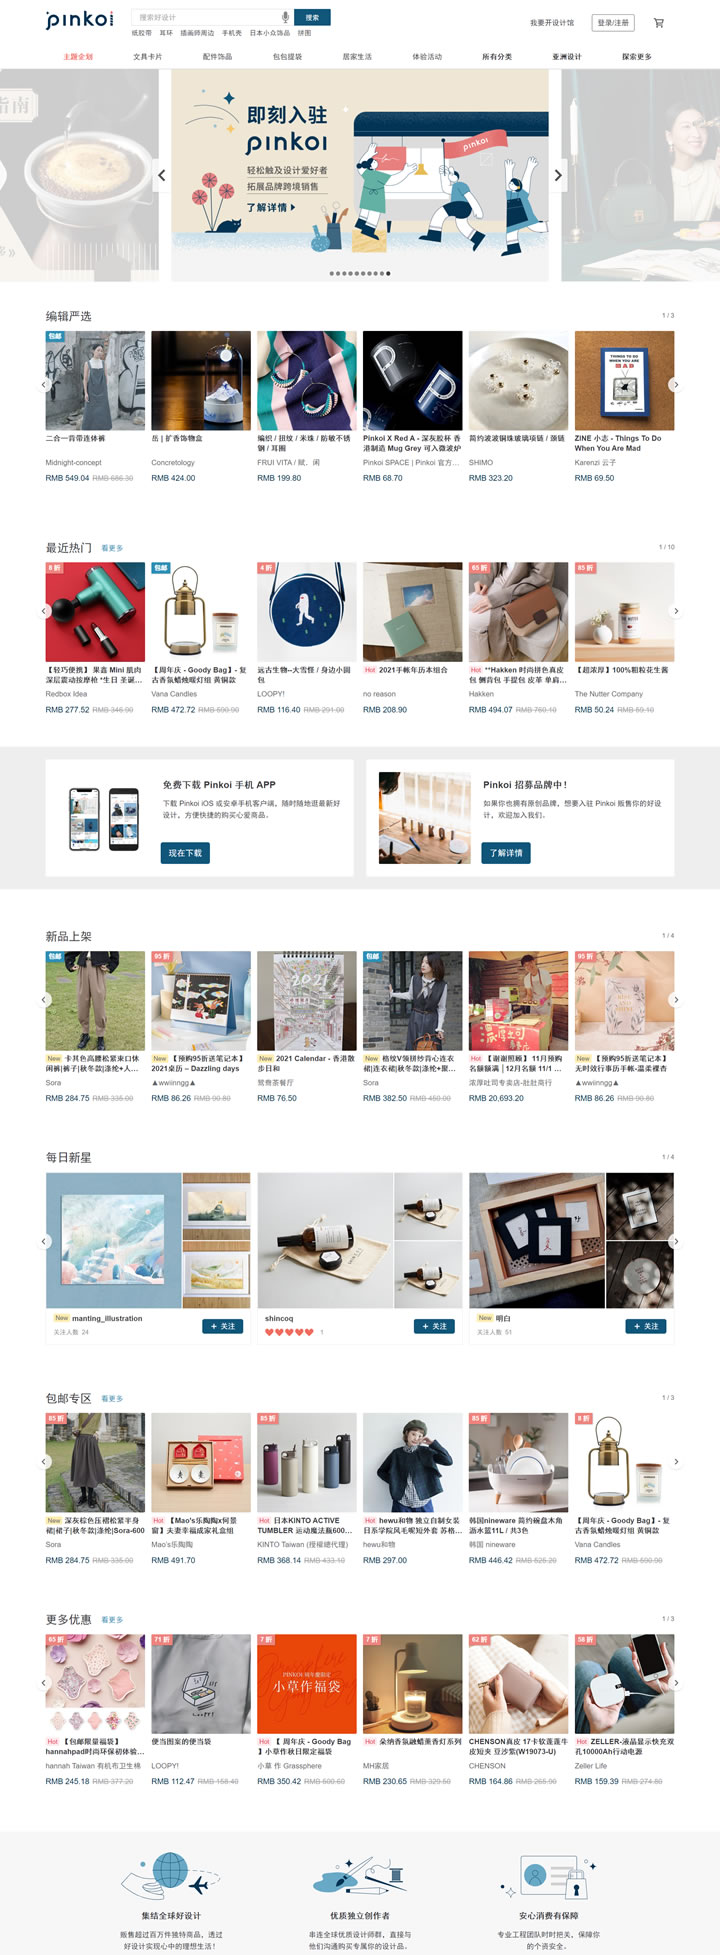 Pinkoi亚洲设计购物网站官网